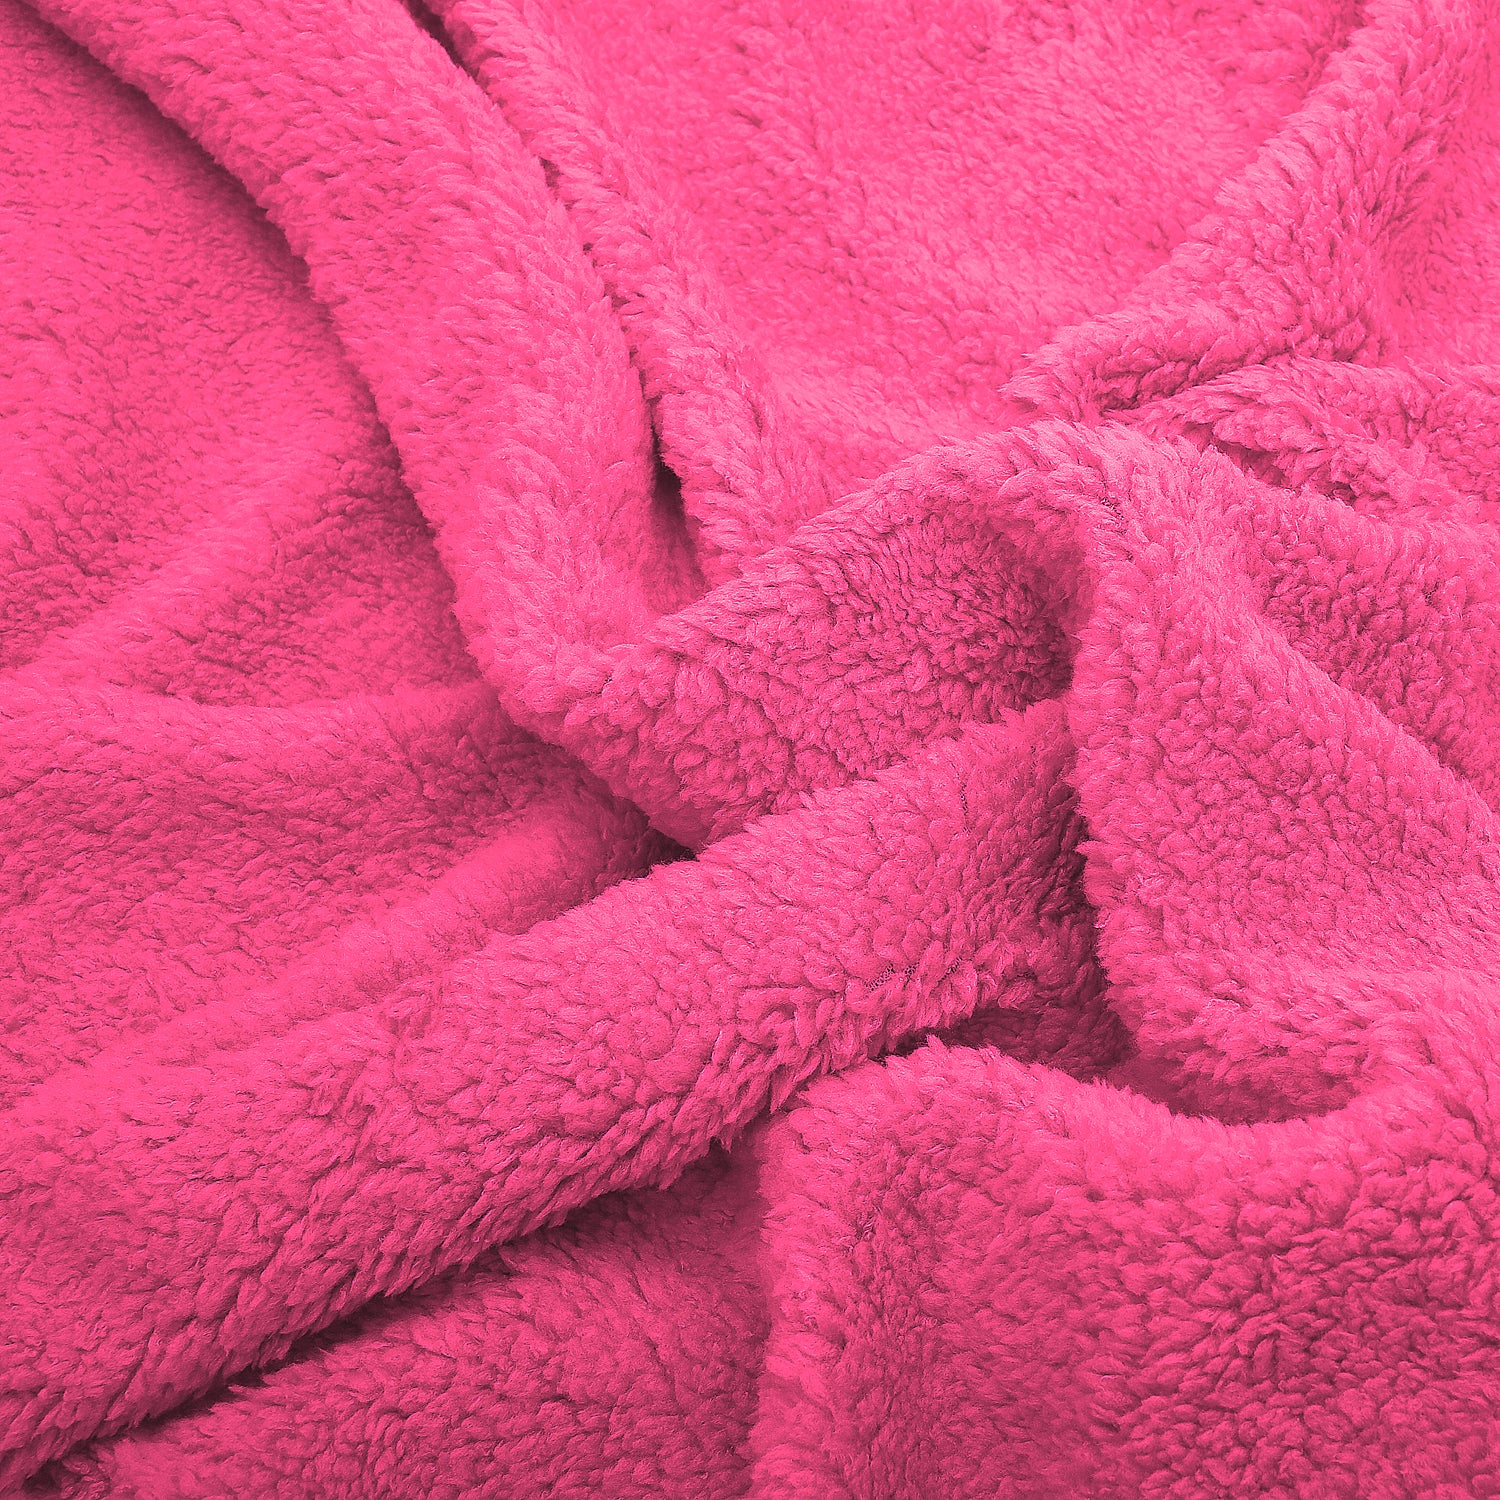 Sweet Cupcake Pink And Yellow Blanket - Baby Moo